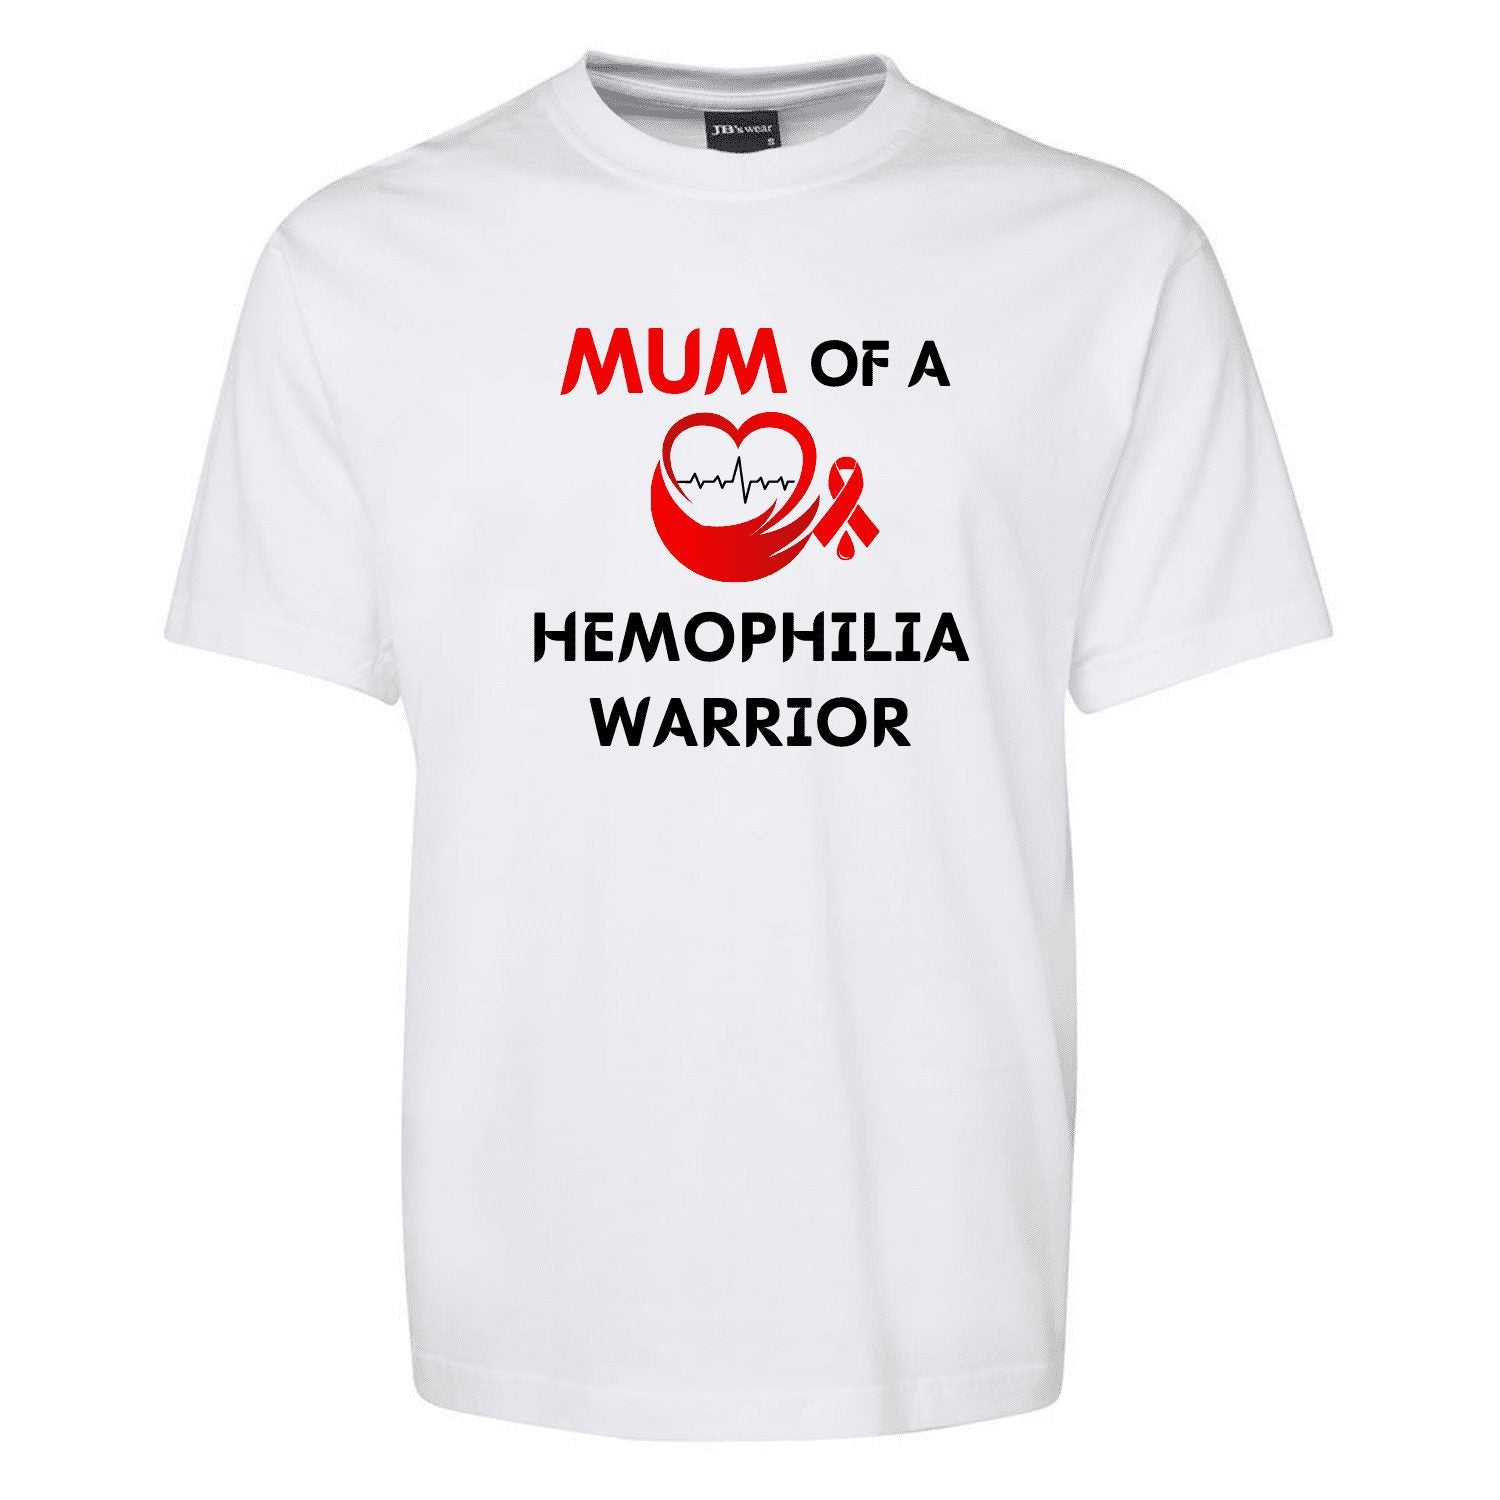 Mum-of-a-Hemophilia-Warrior